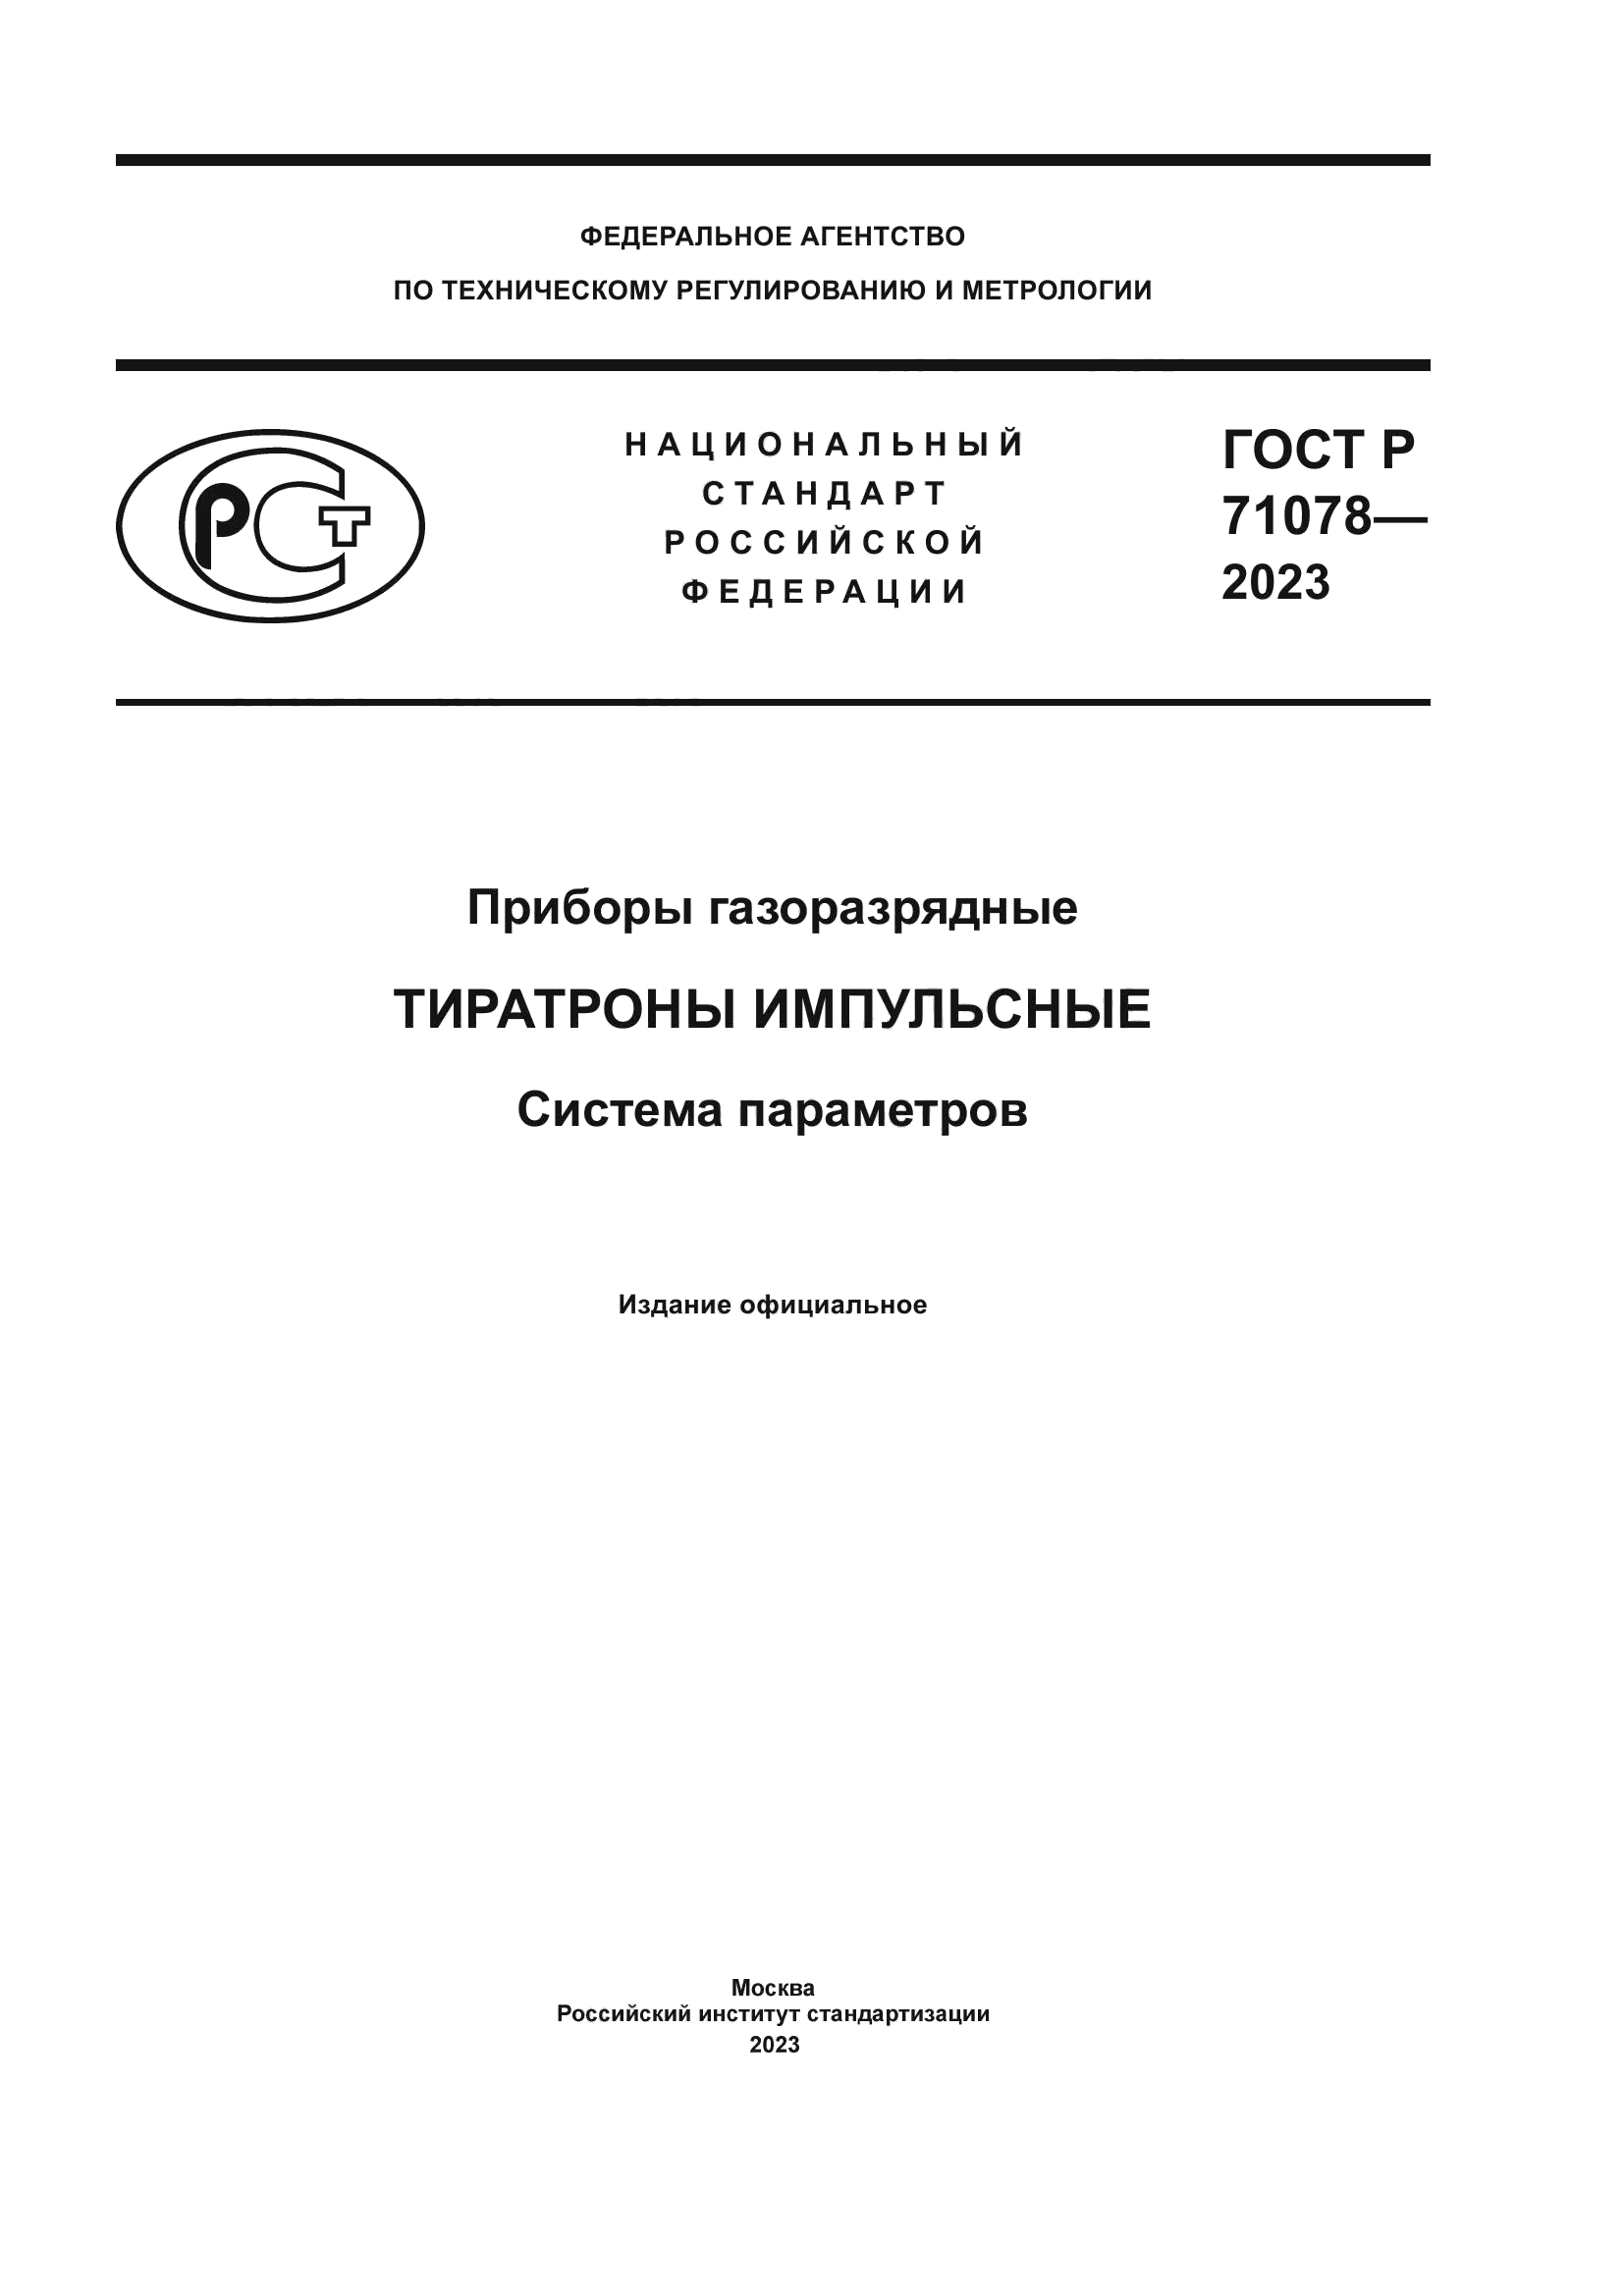 ГОСТ Р 71078-2023